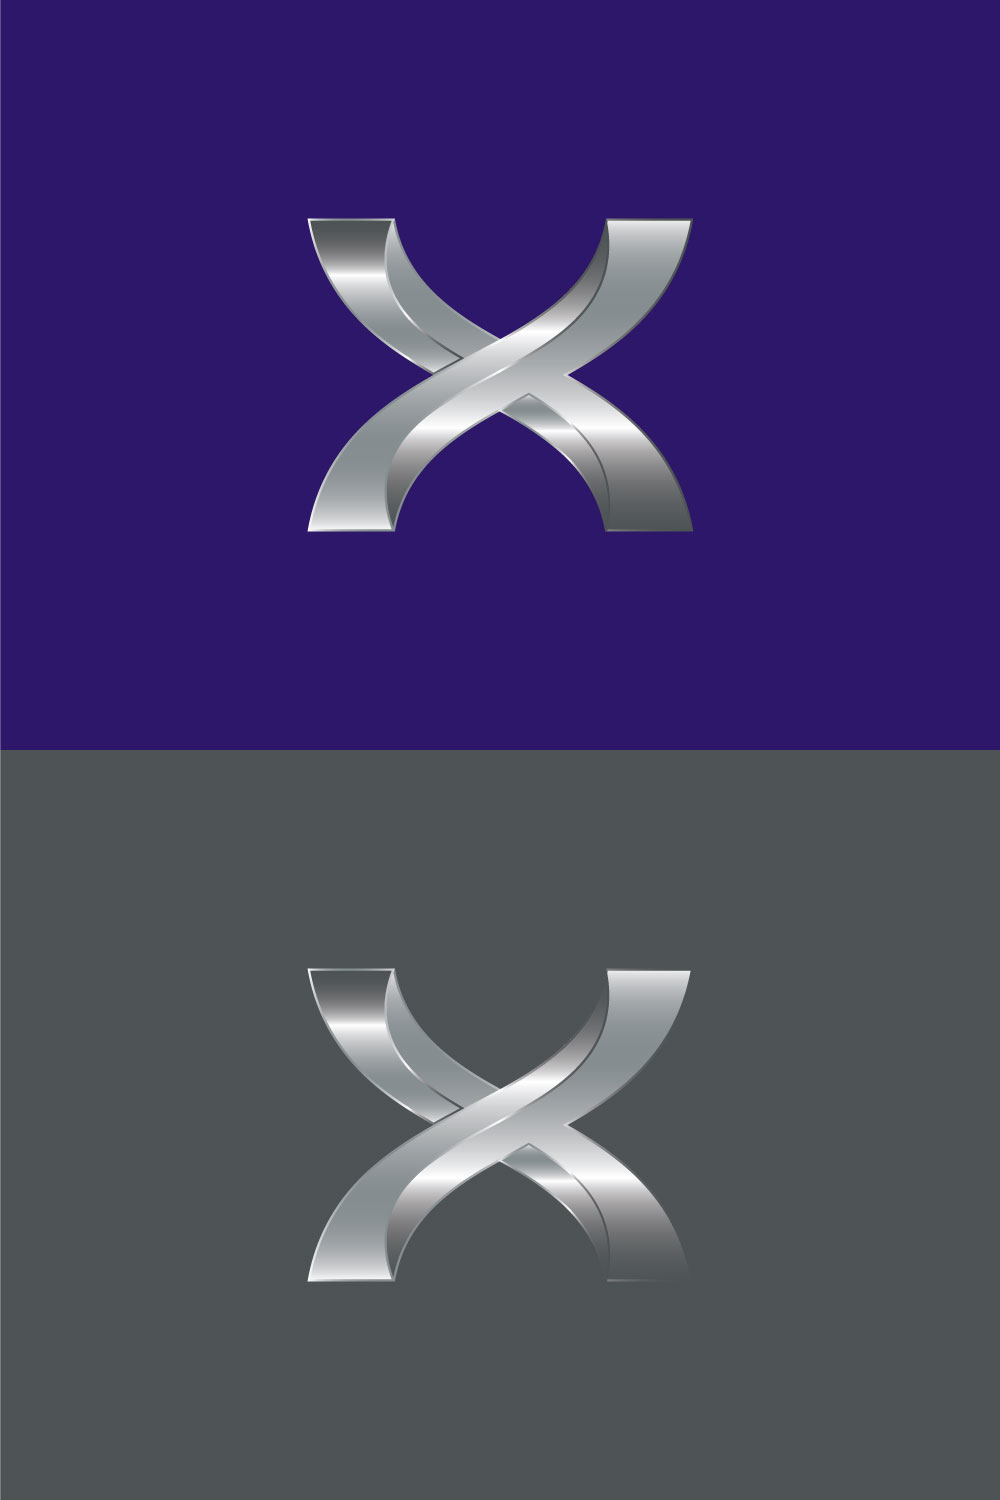 X Logo pinterest preview image.